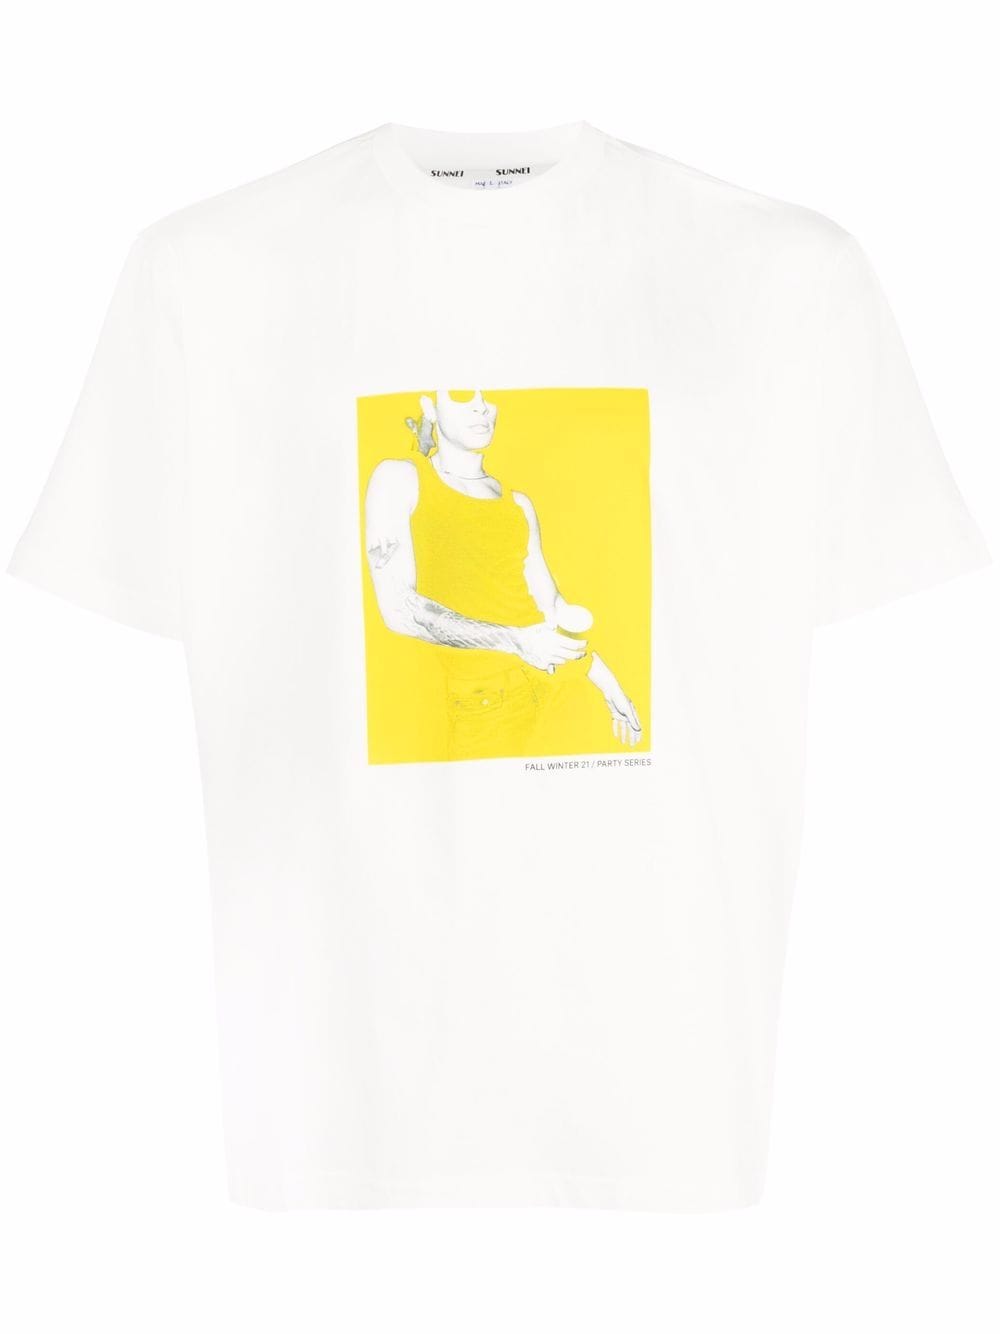 Sunnei T-shirt met print Wit